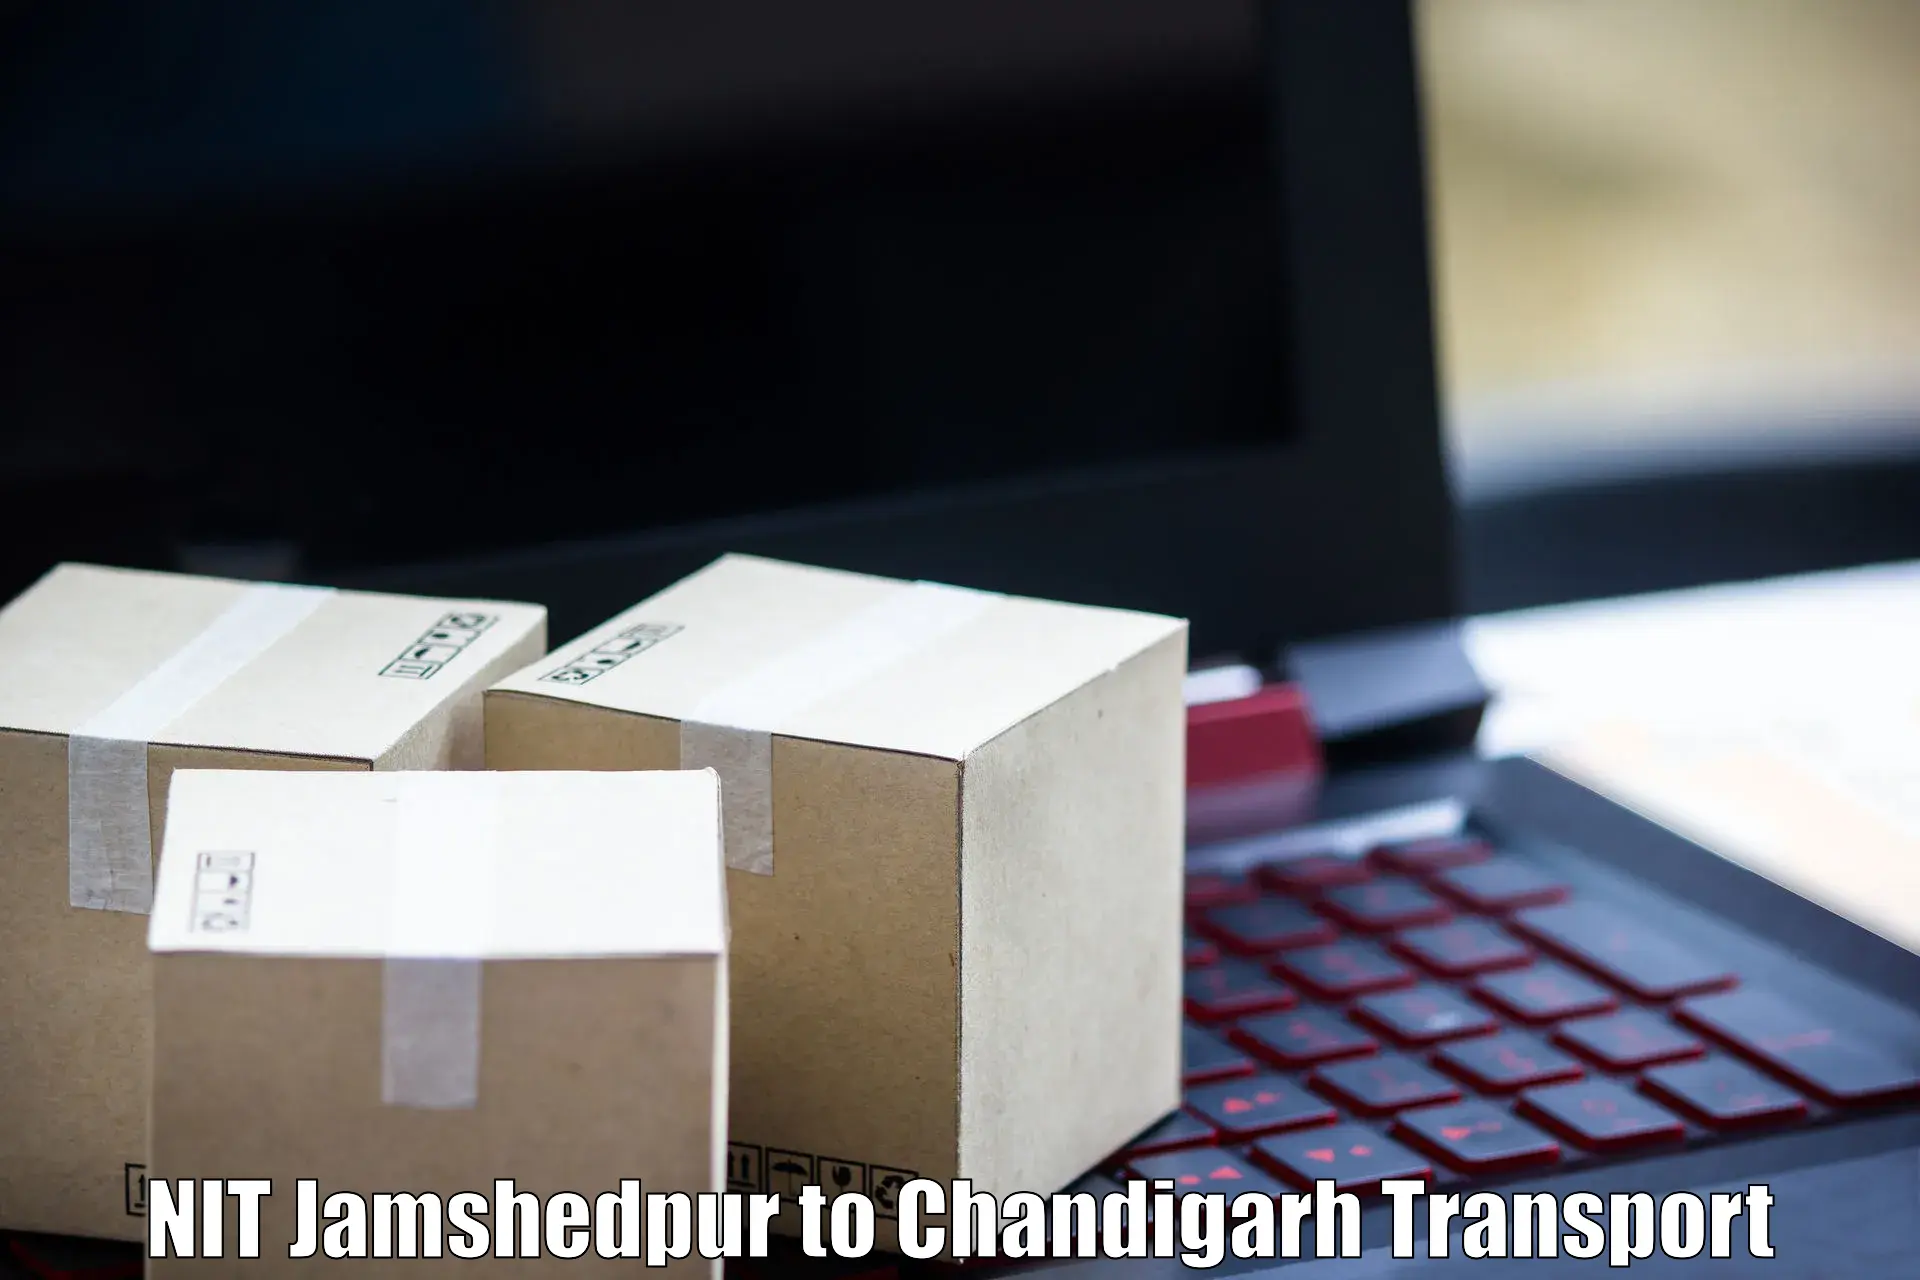 Online transport service NIT Jamshedpur to Chandigarh